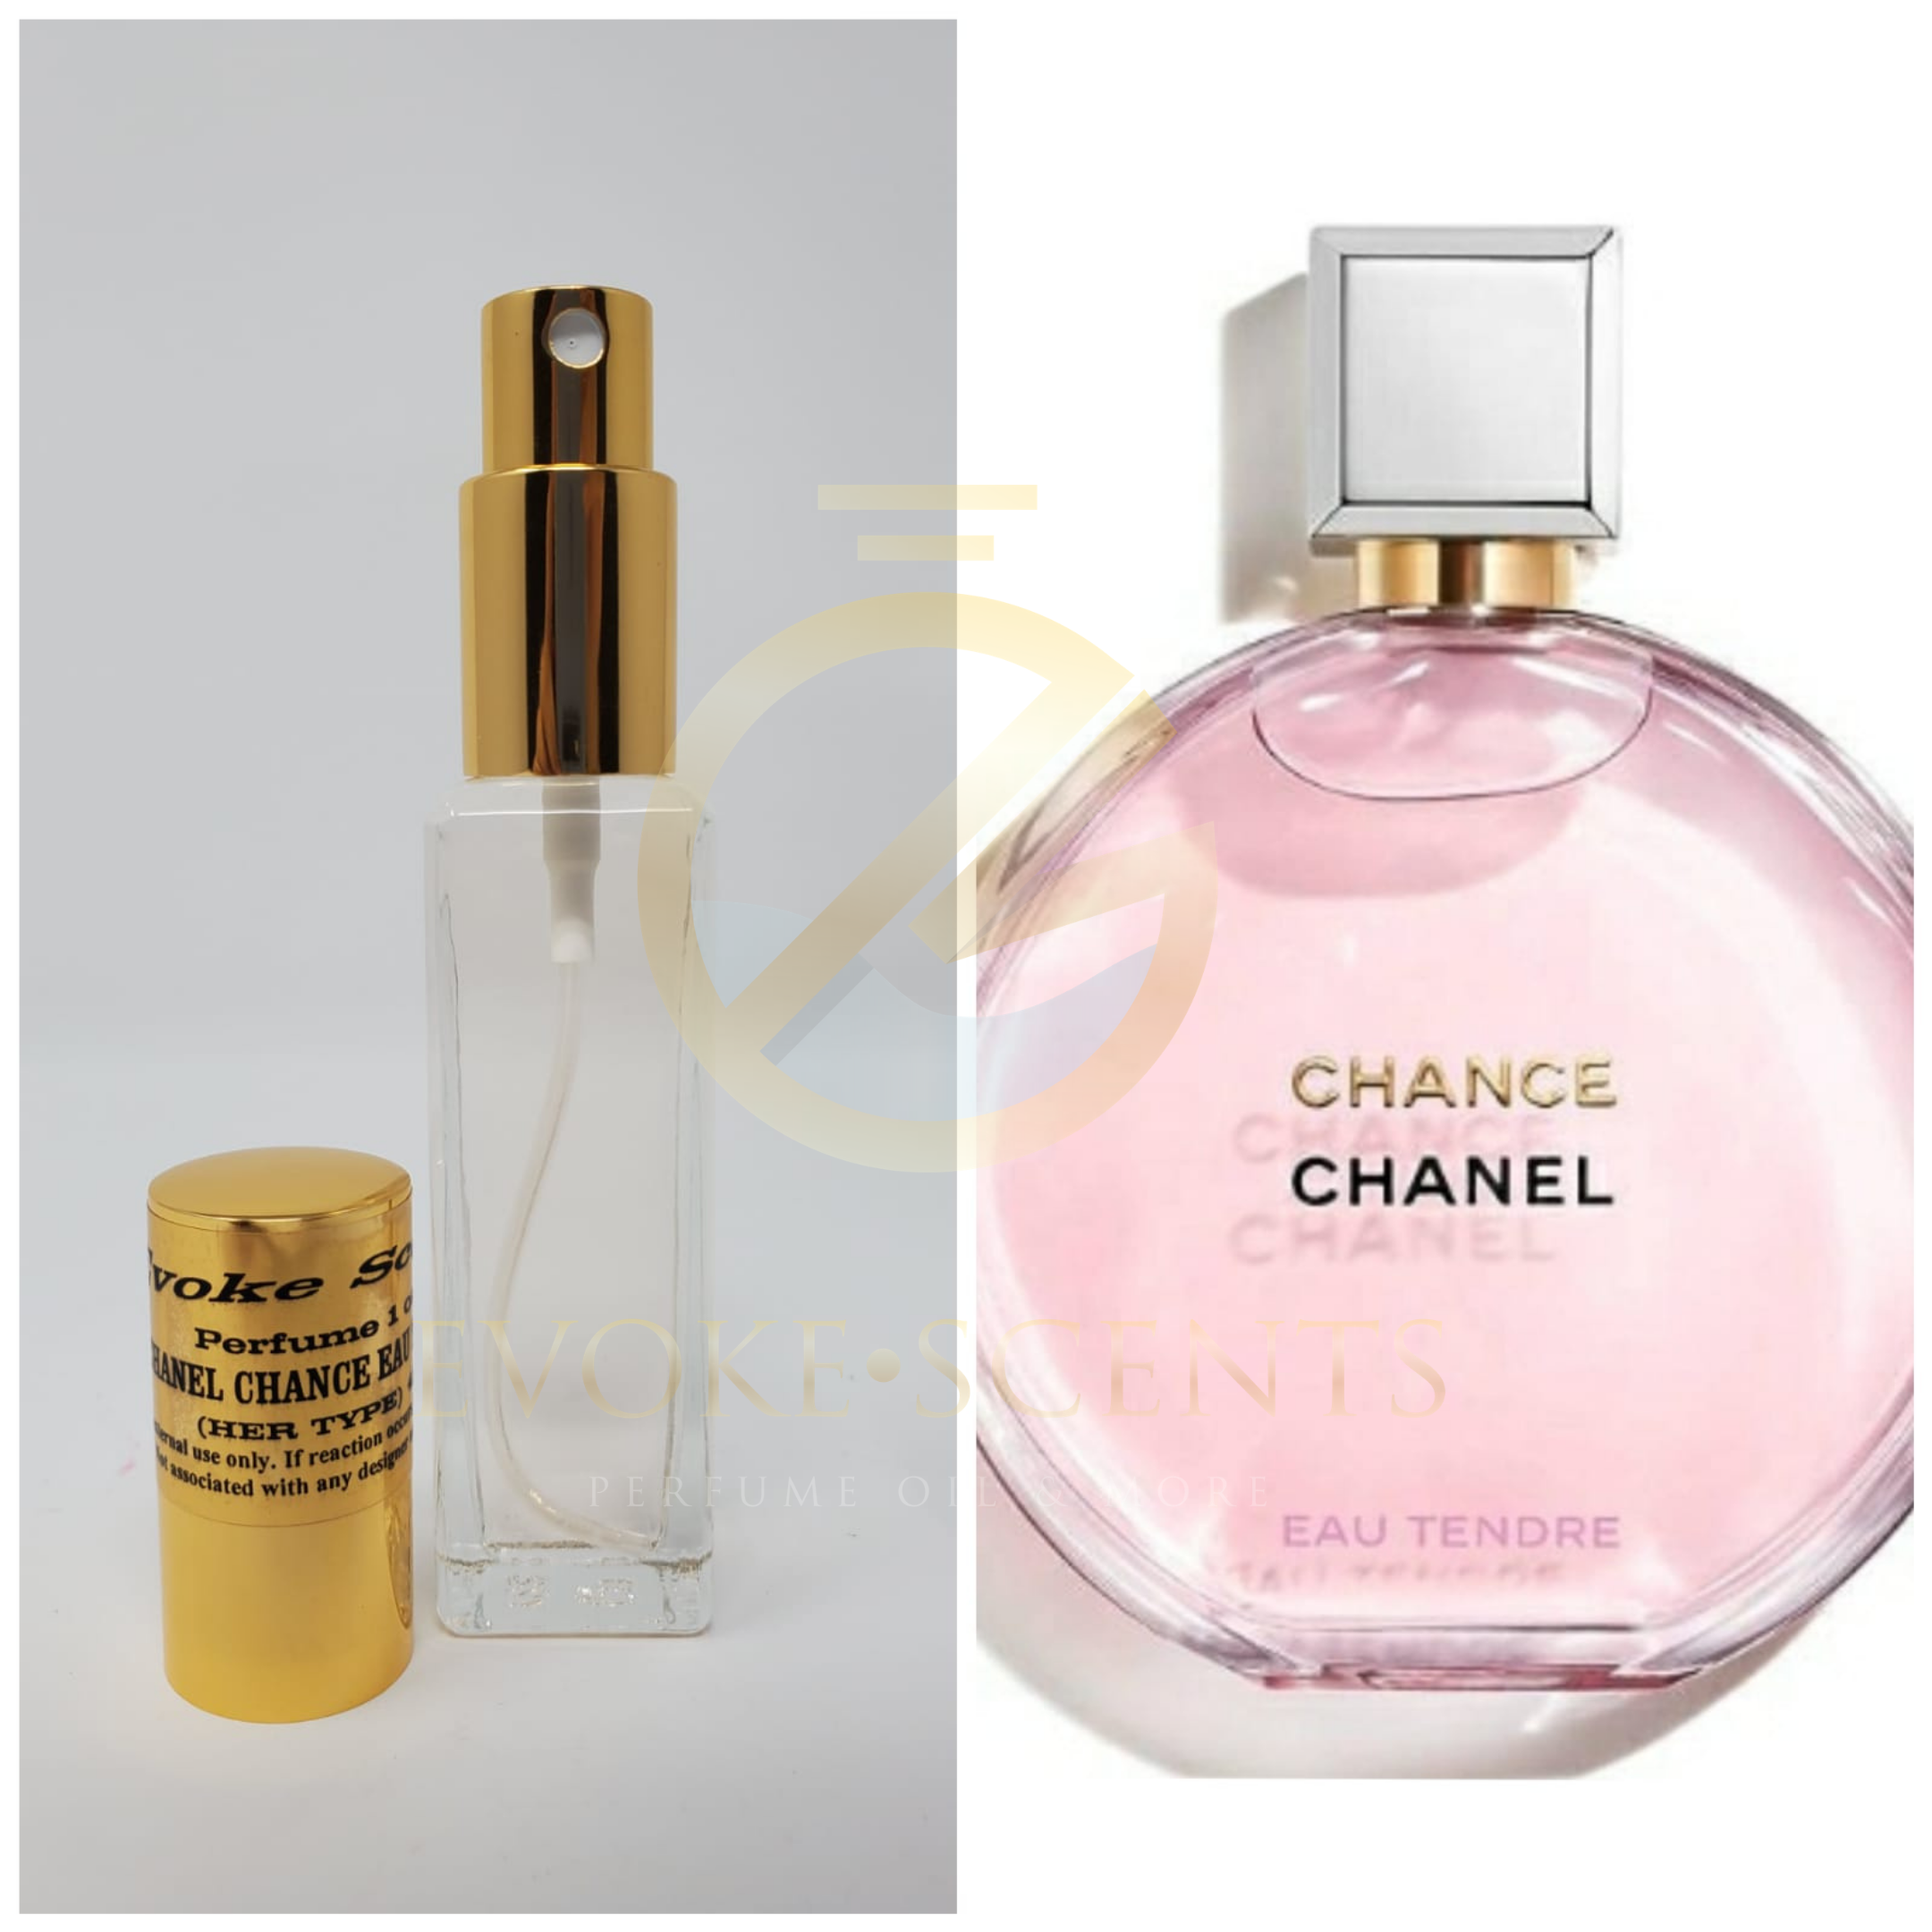 Chanel Chance Eau Tendre Type 1oz Perfume – Evoke Scents